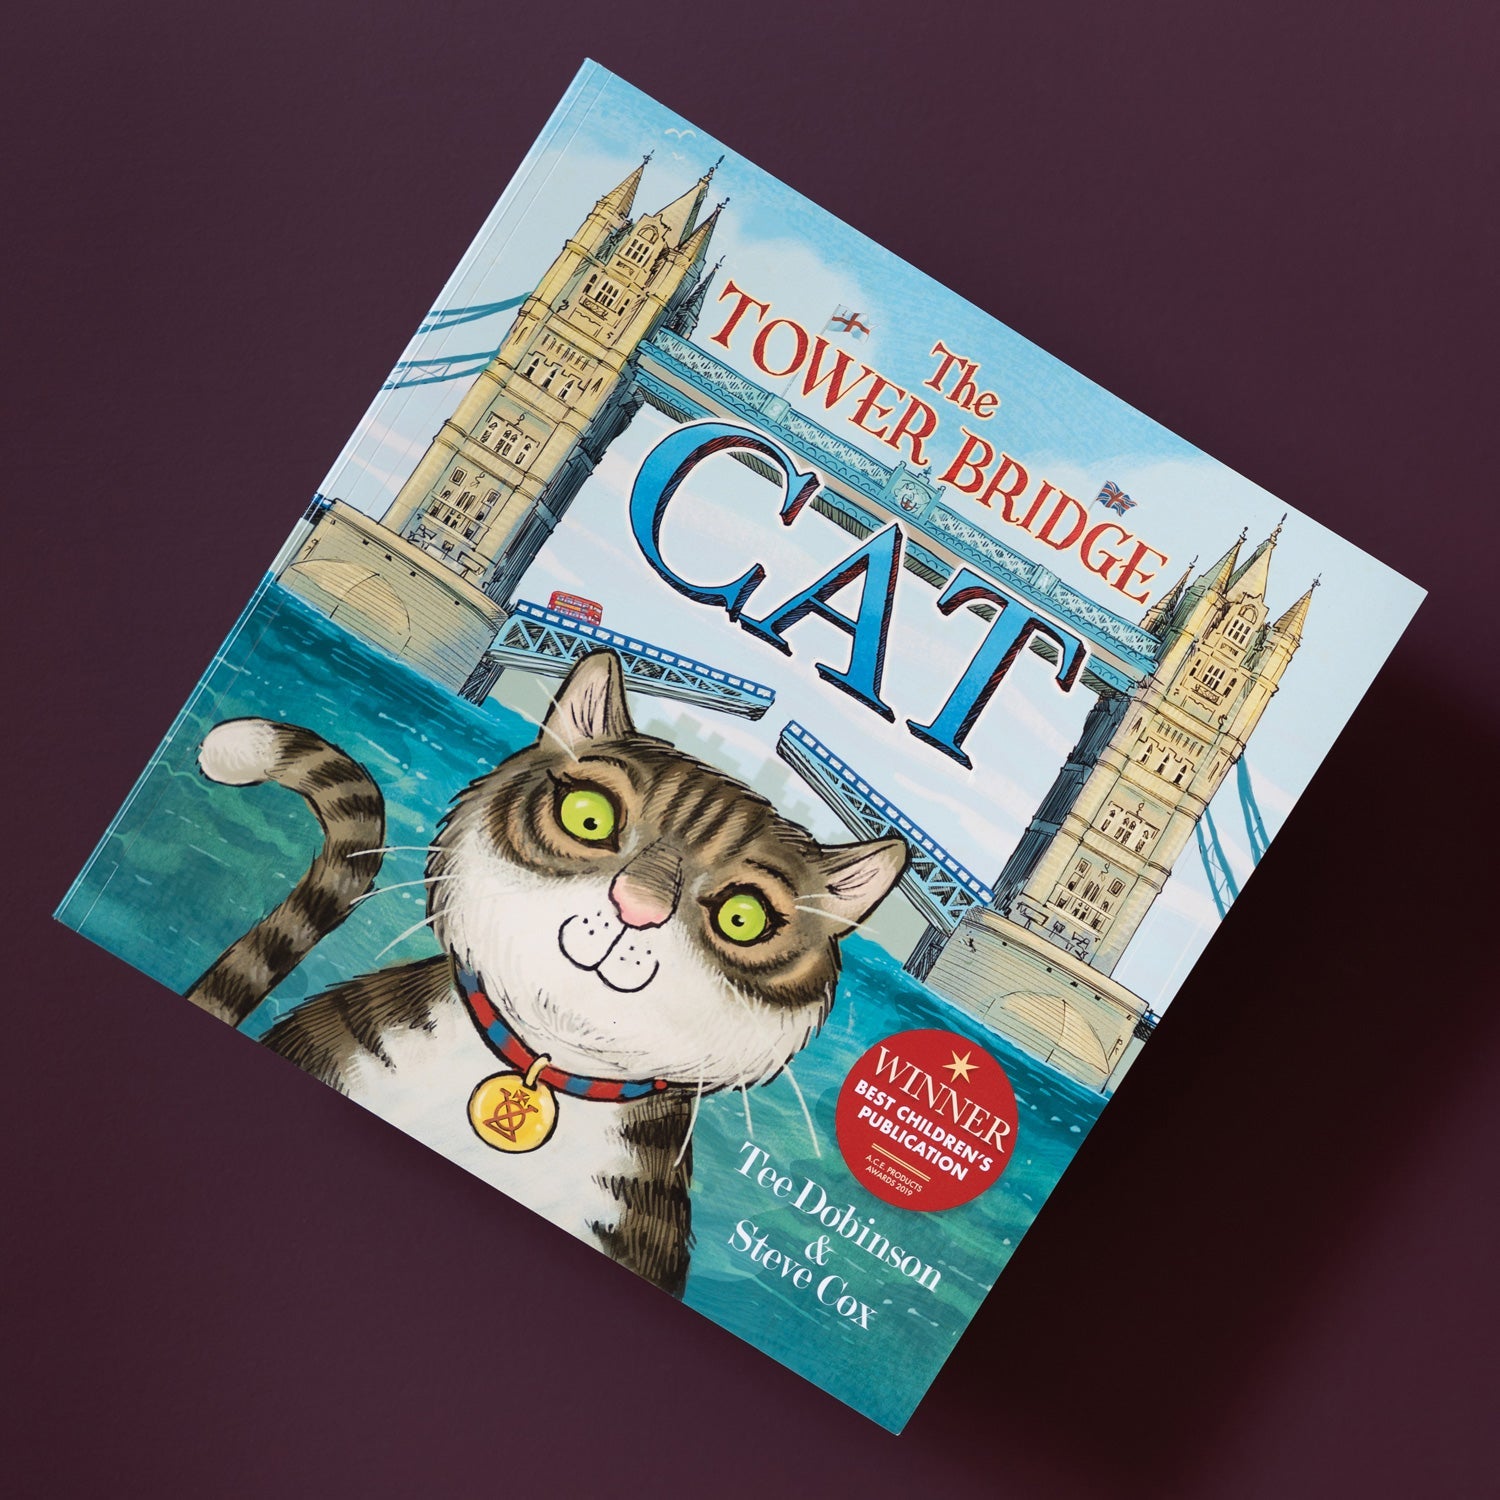 The Tower Bridge Cat Book Series